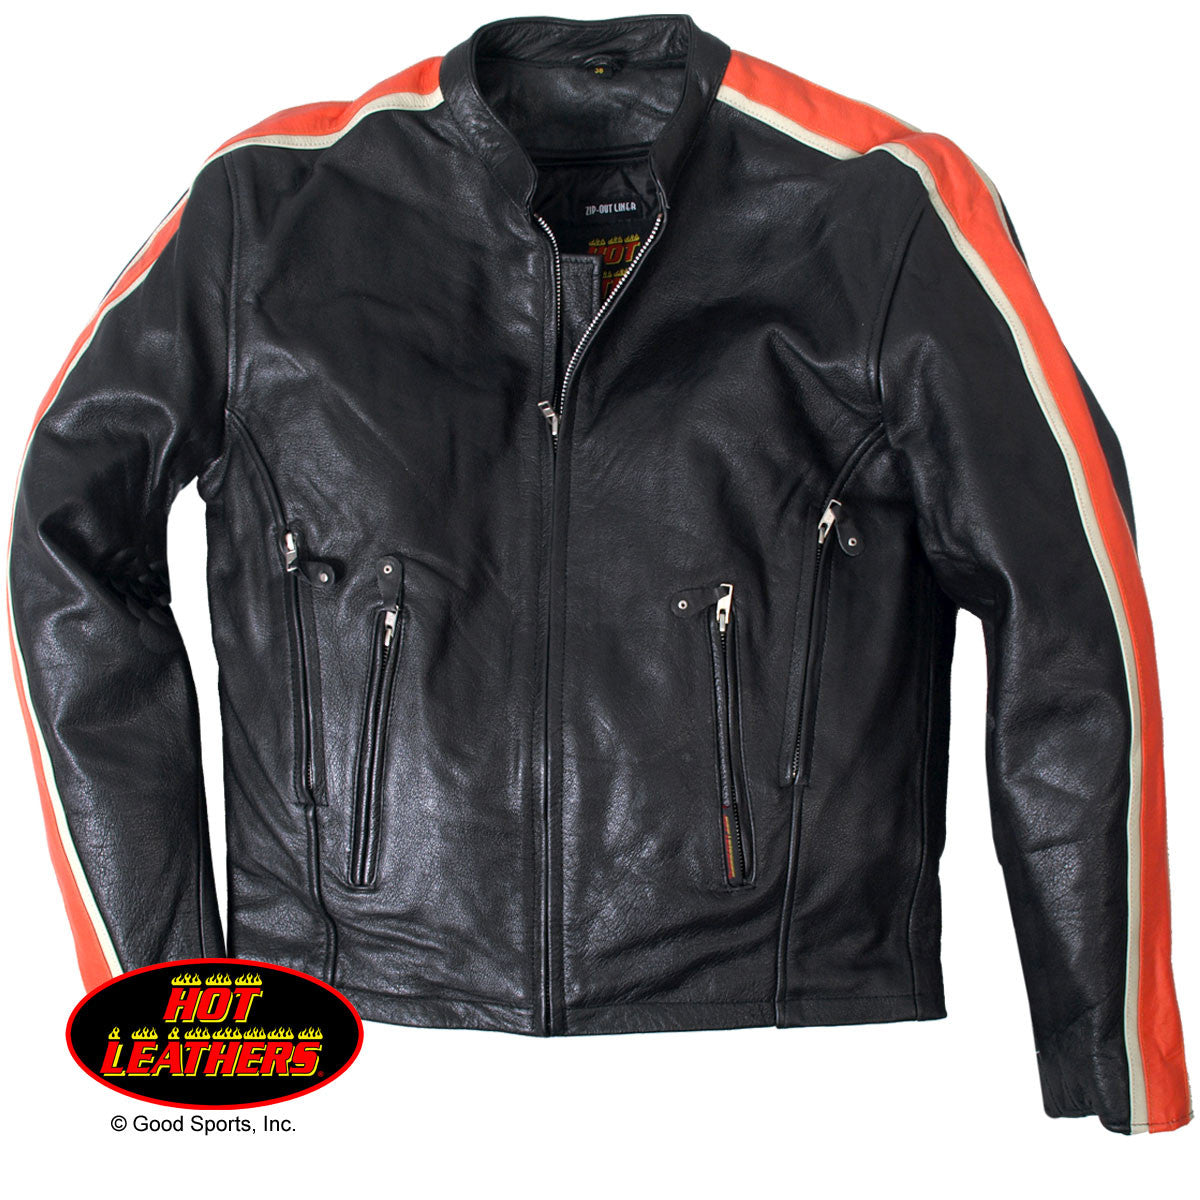 Men's Leather Jacket with Orange & Cream Arm Stripes | Maine-Line Leather